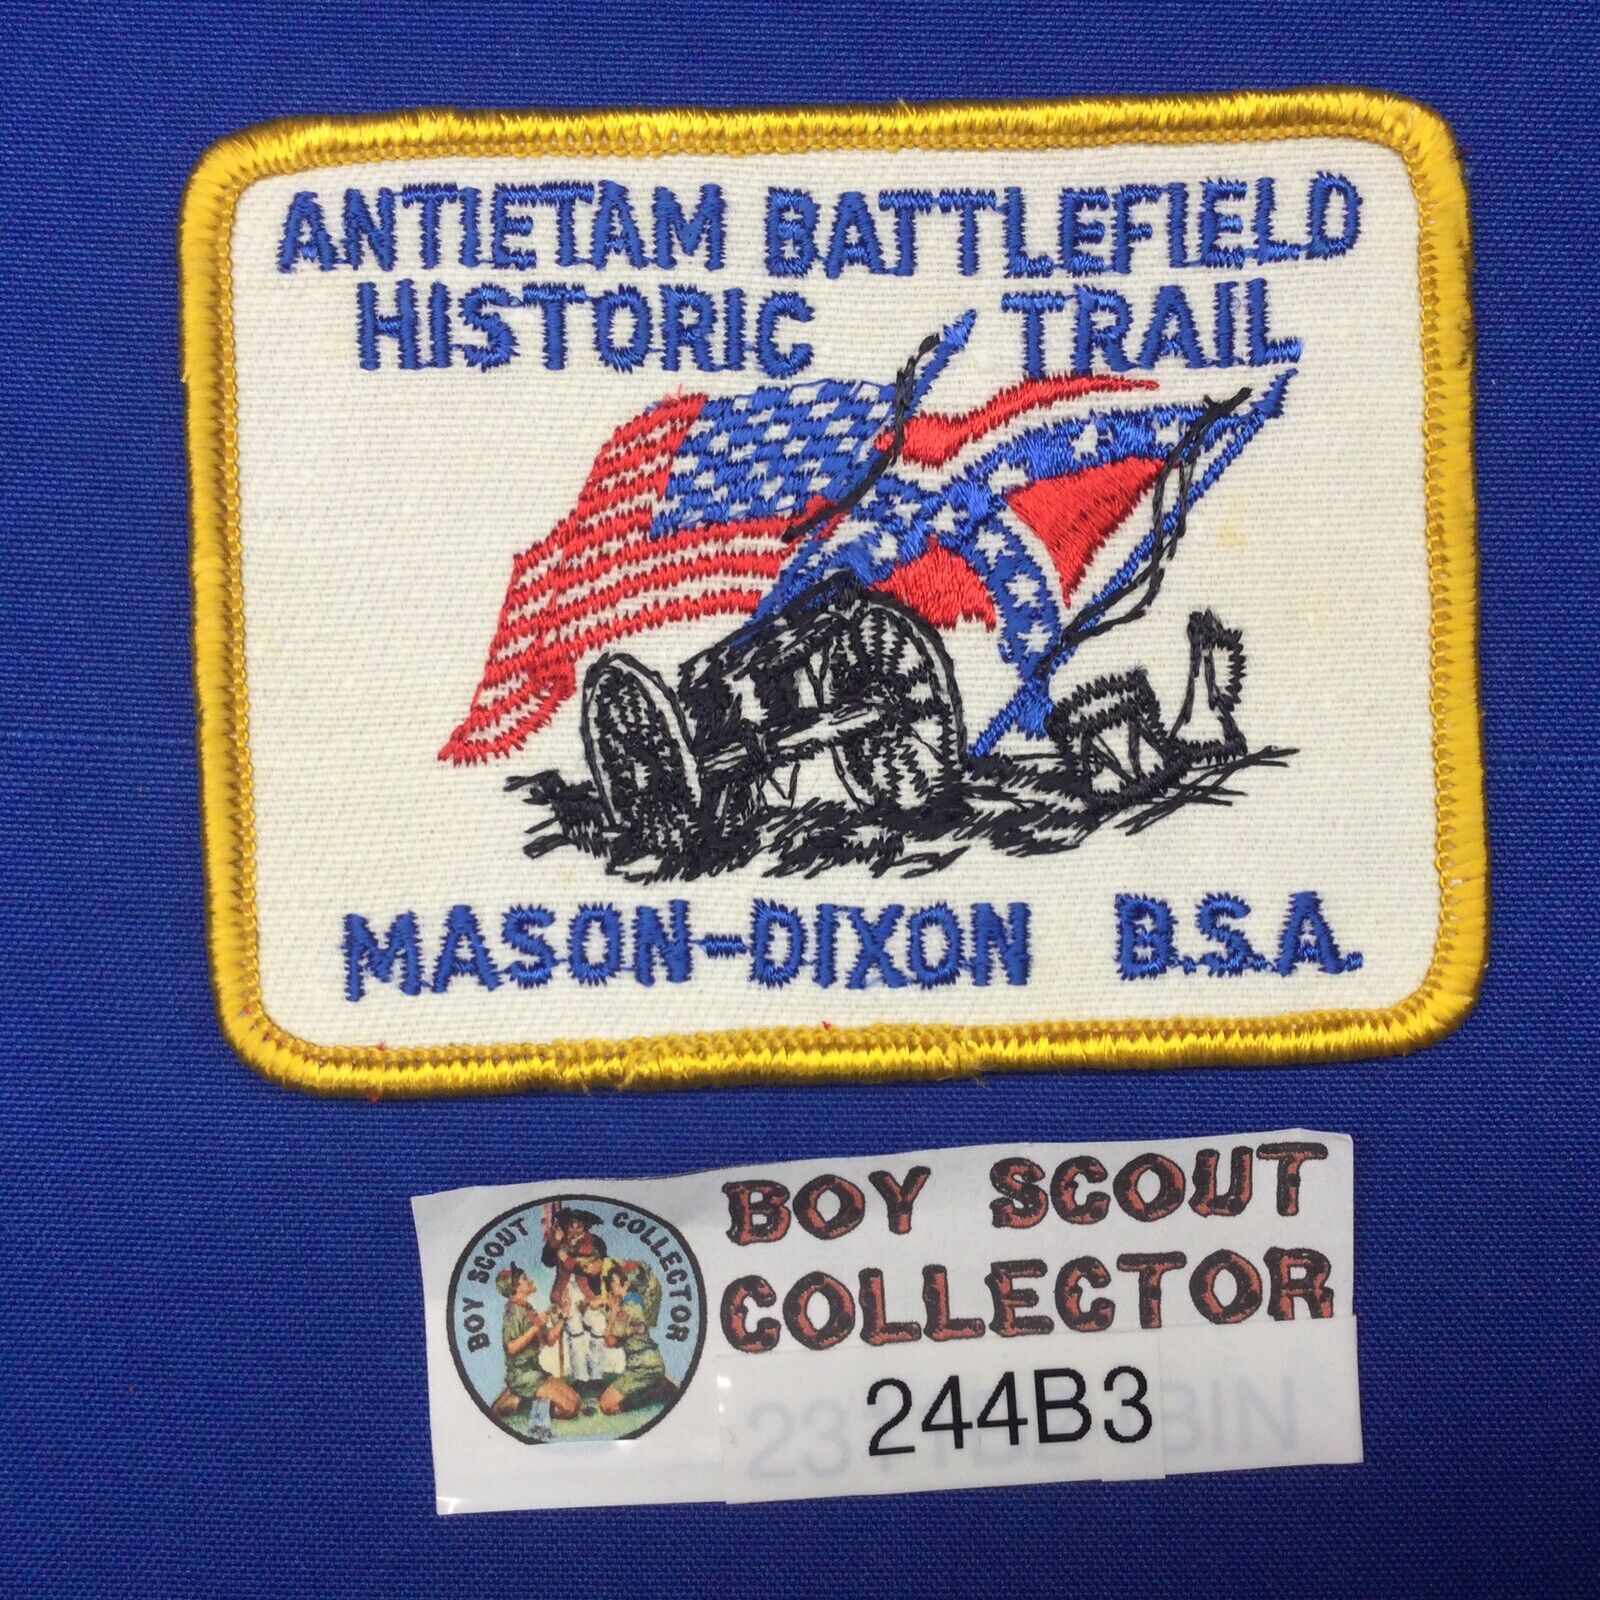 Boy Scout Antietam Battlefield Trail Mason Dixon Council BSA Patch 244B3